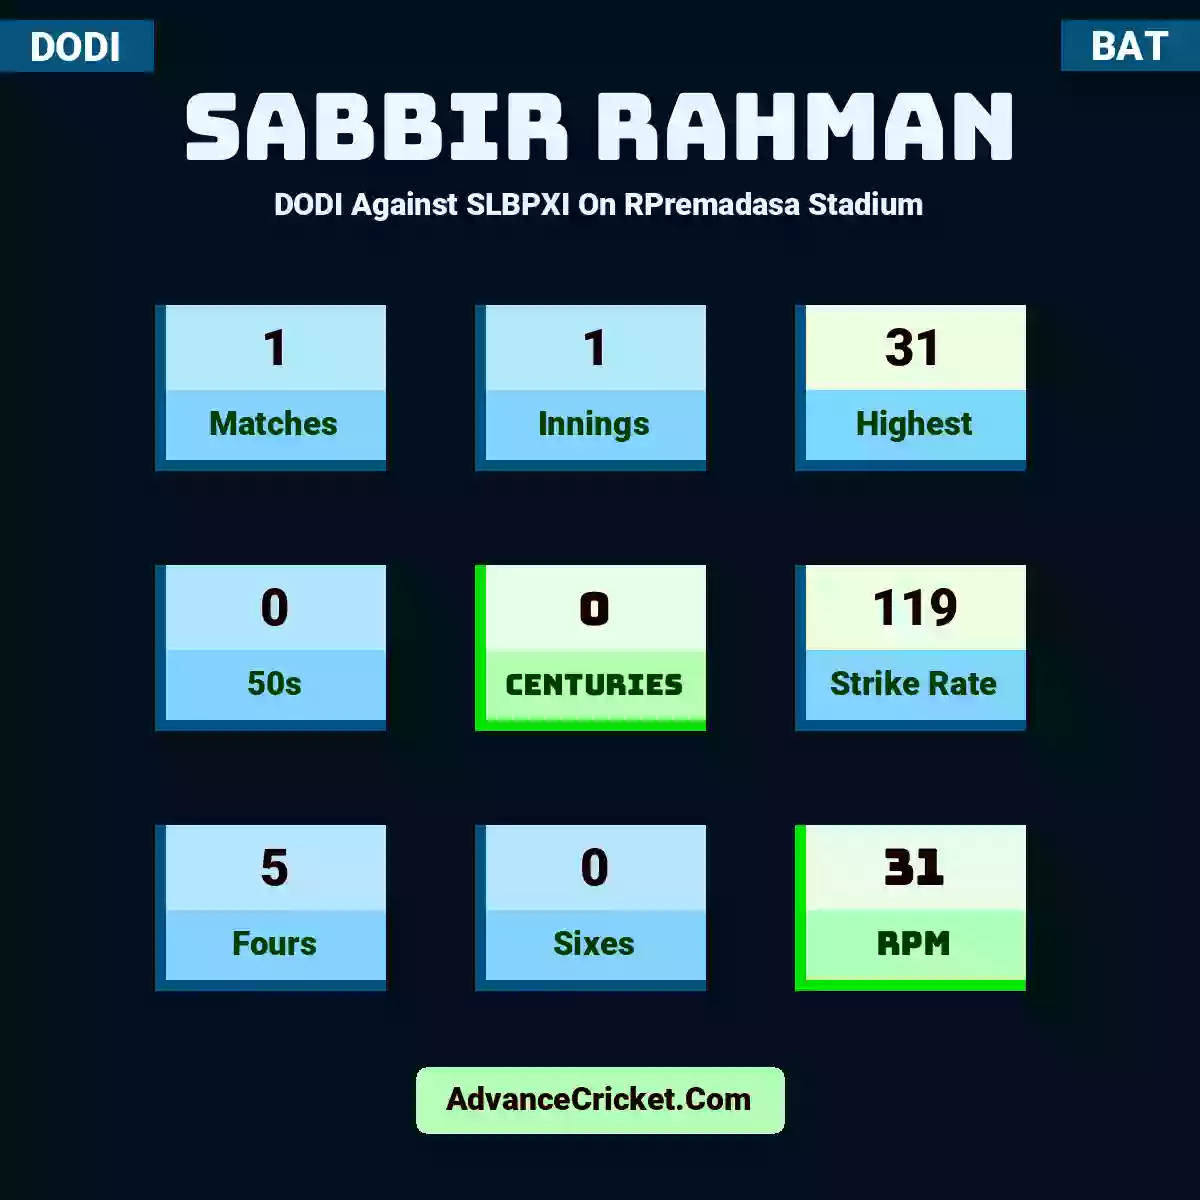 Sabbir Rahman DODI  Against SLBPXI On RPremadasa Stadium, Sabbir Rahman played 1 matches, scored 31 runs as highest, 0 half-centuries, and 0 centuries, with a strike rate of 119. S.Rahman hit 5 fours and 0 sixes, with an RPM of 31.